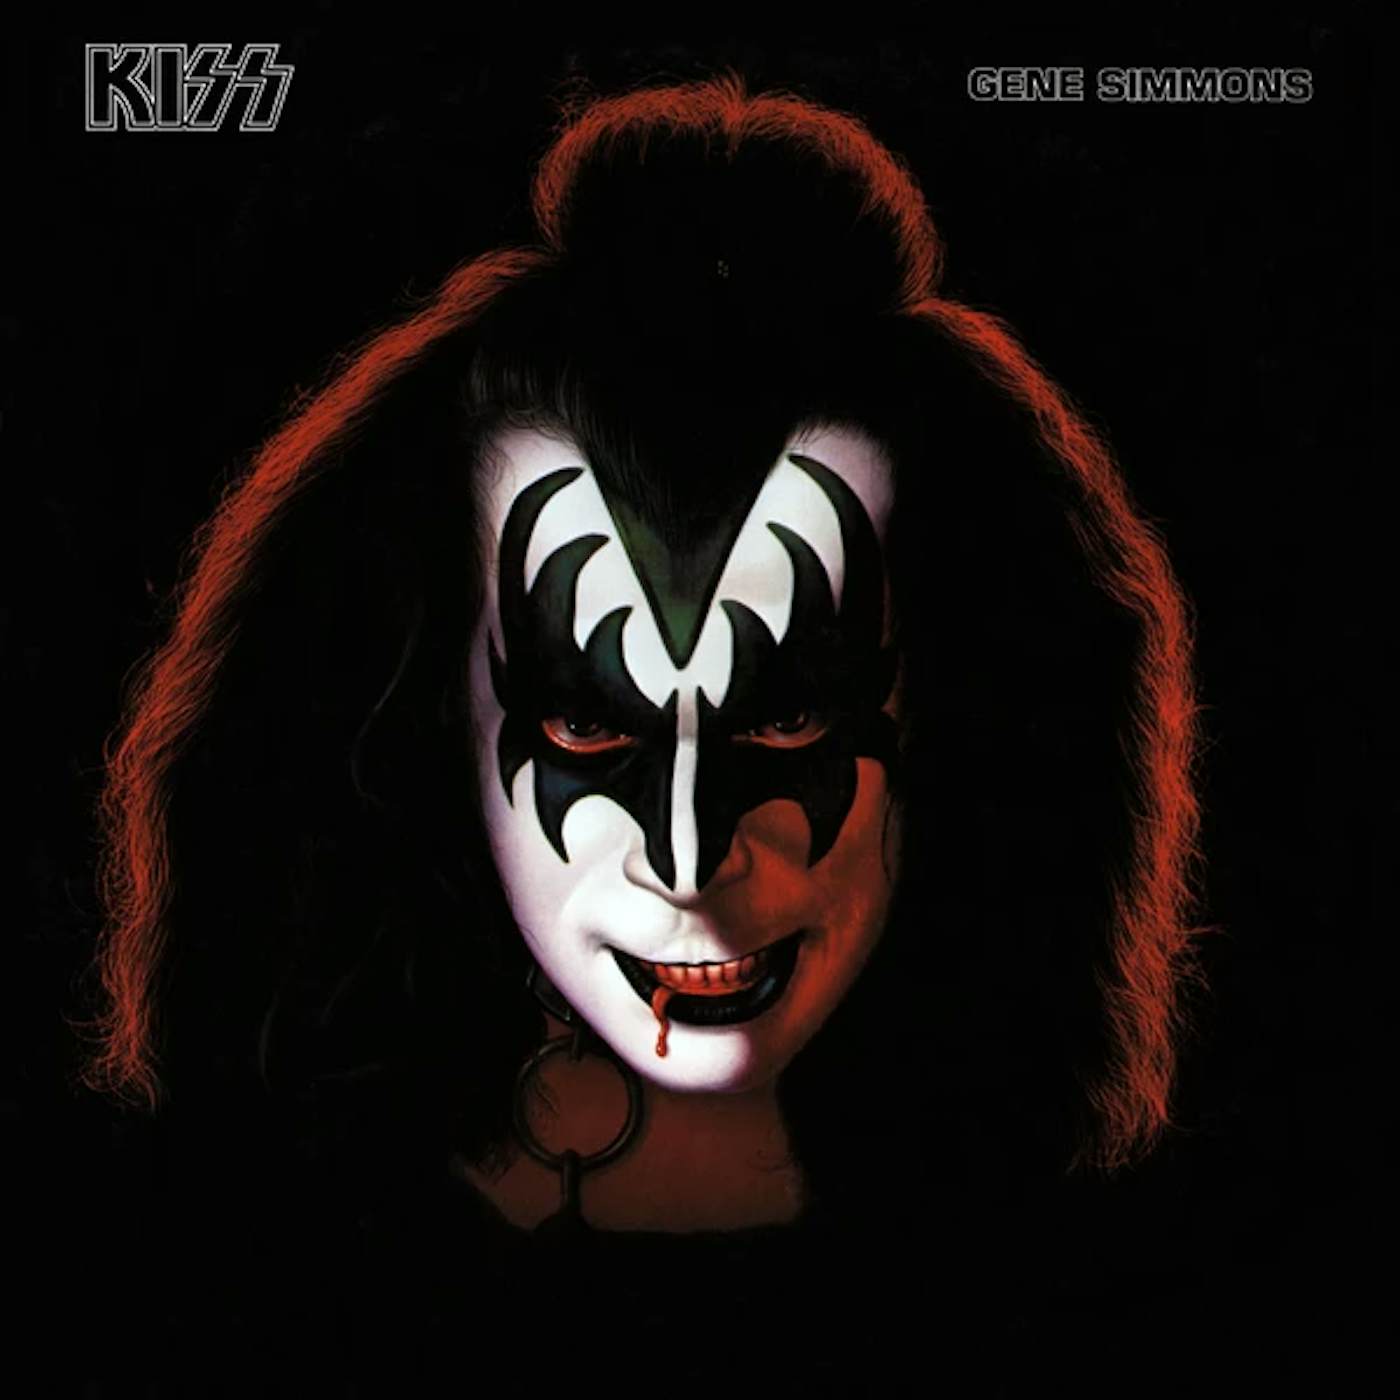 KISS GENE SIMMONS (PIC DISC) Vinyl Record